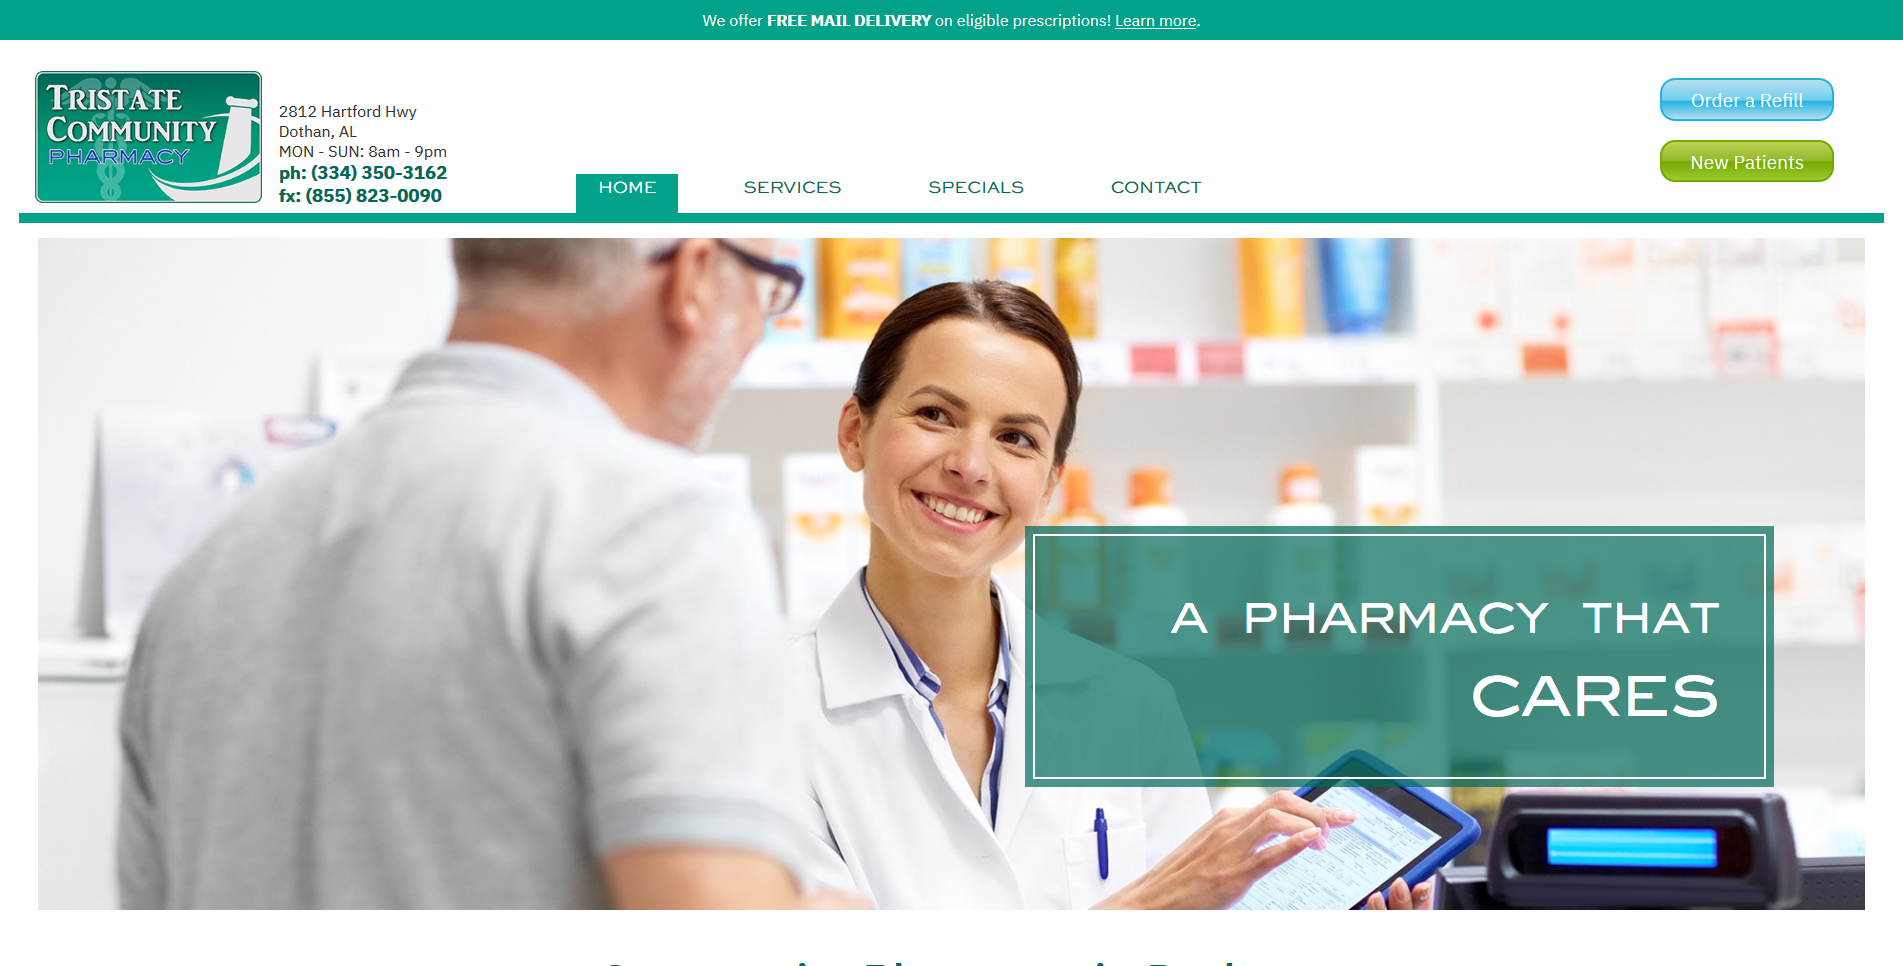 Tristate Community Pharmacy, a website design